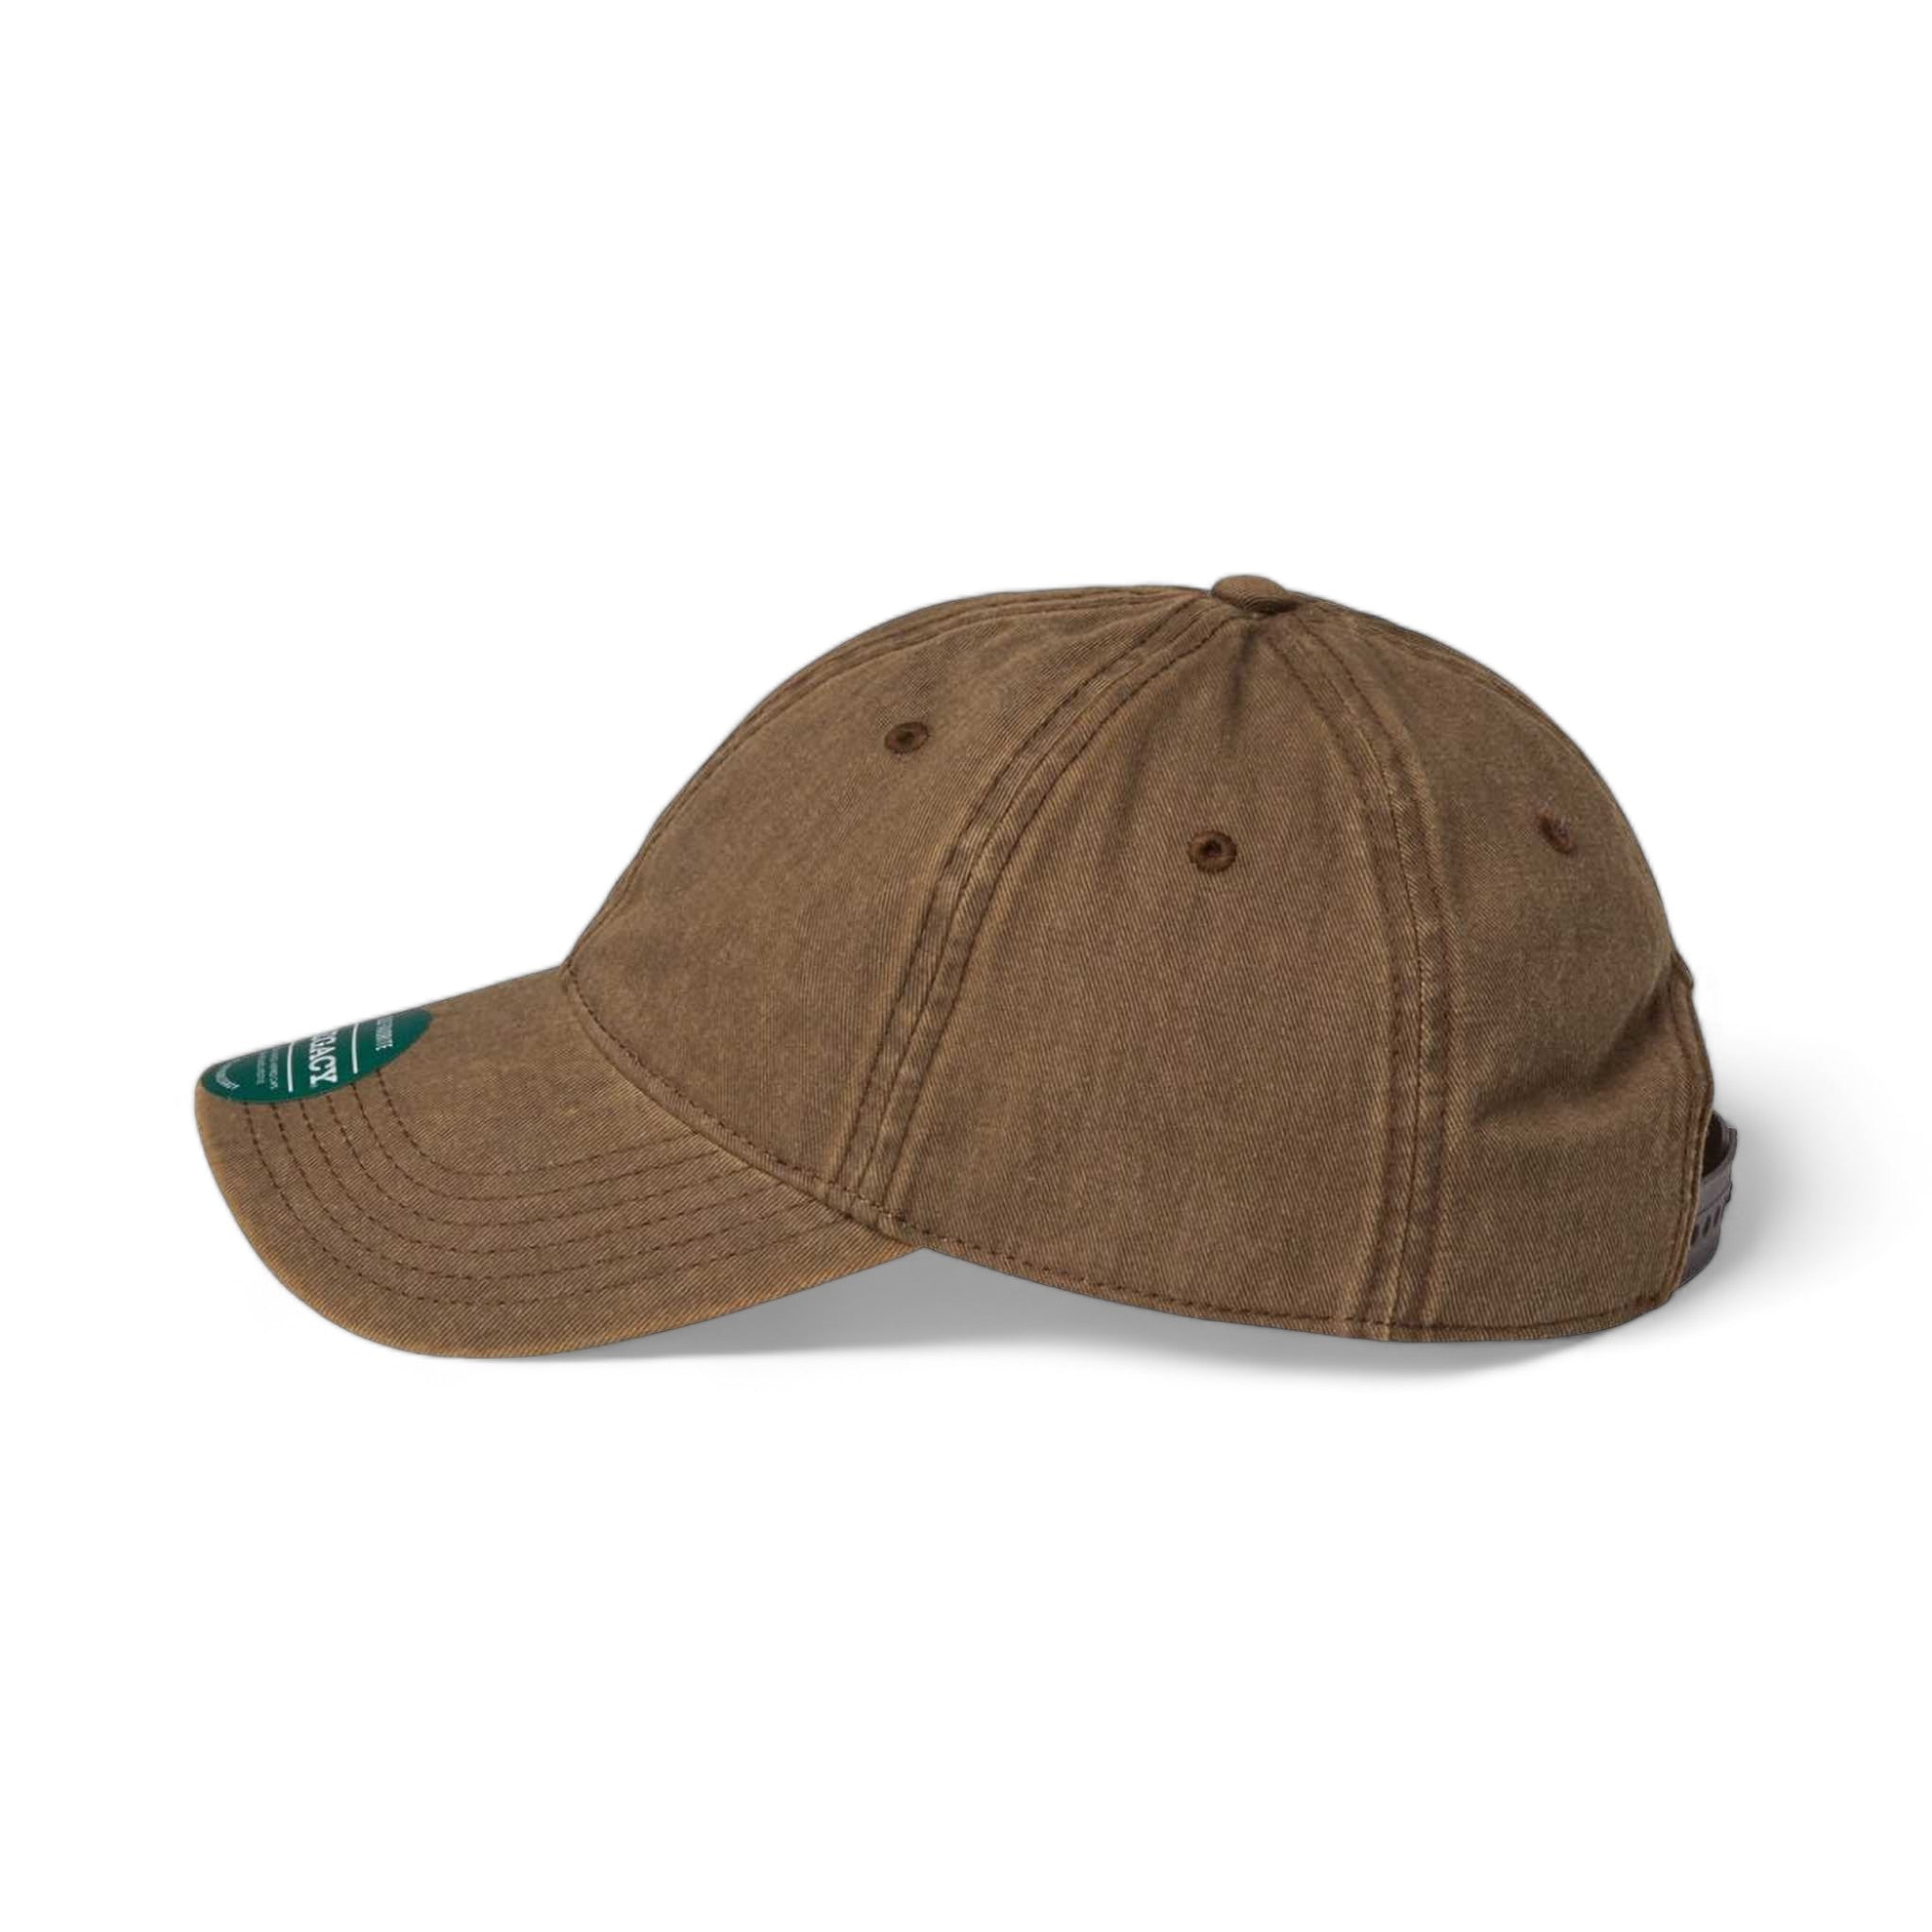 Side view of LEGACY OFAST custom hat in brown